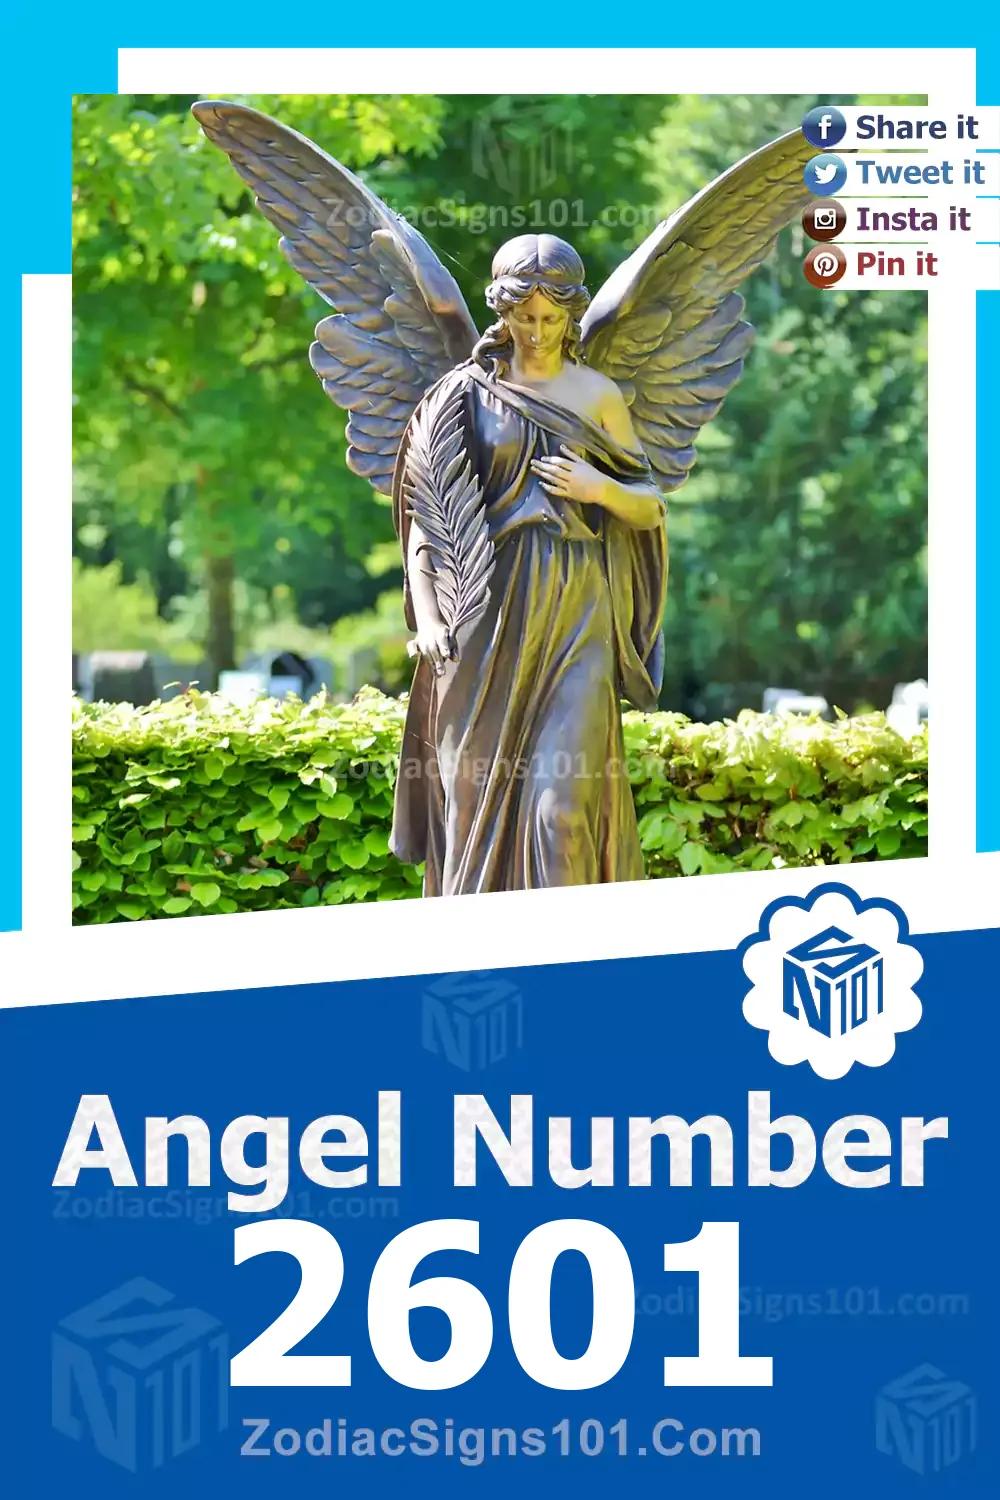 2601-Angel-Number-Meaning.jpg